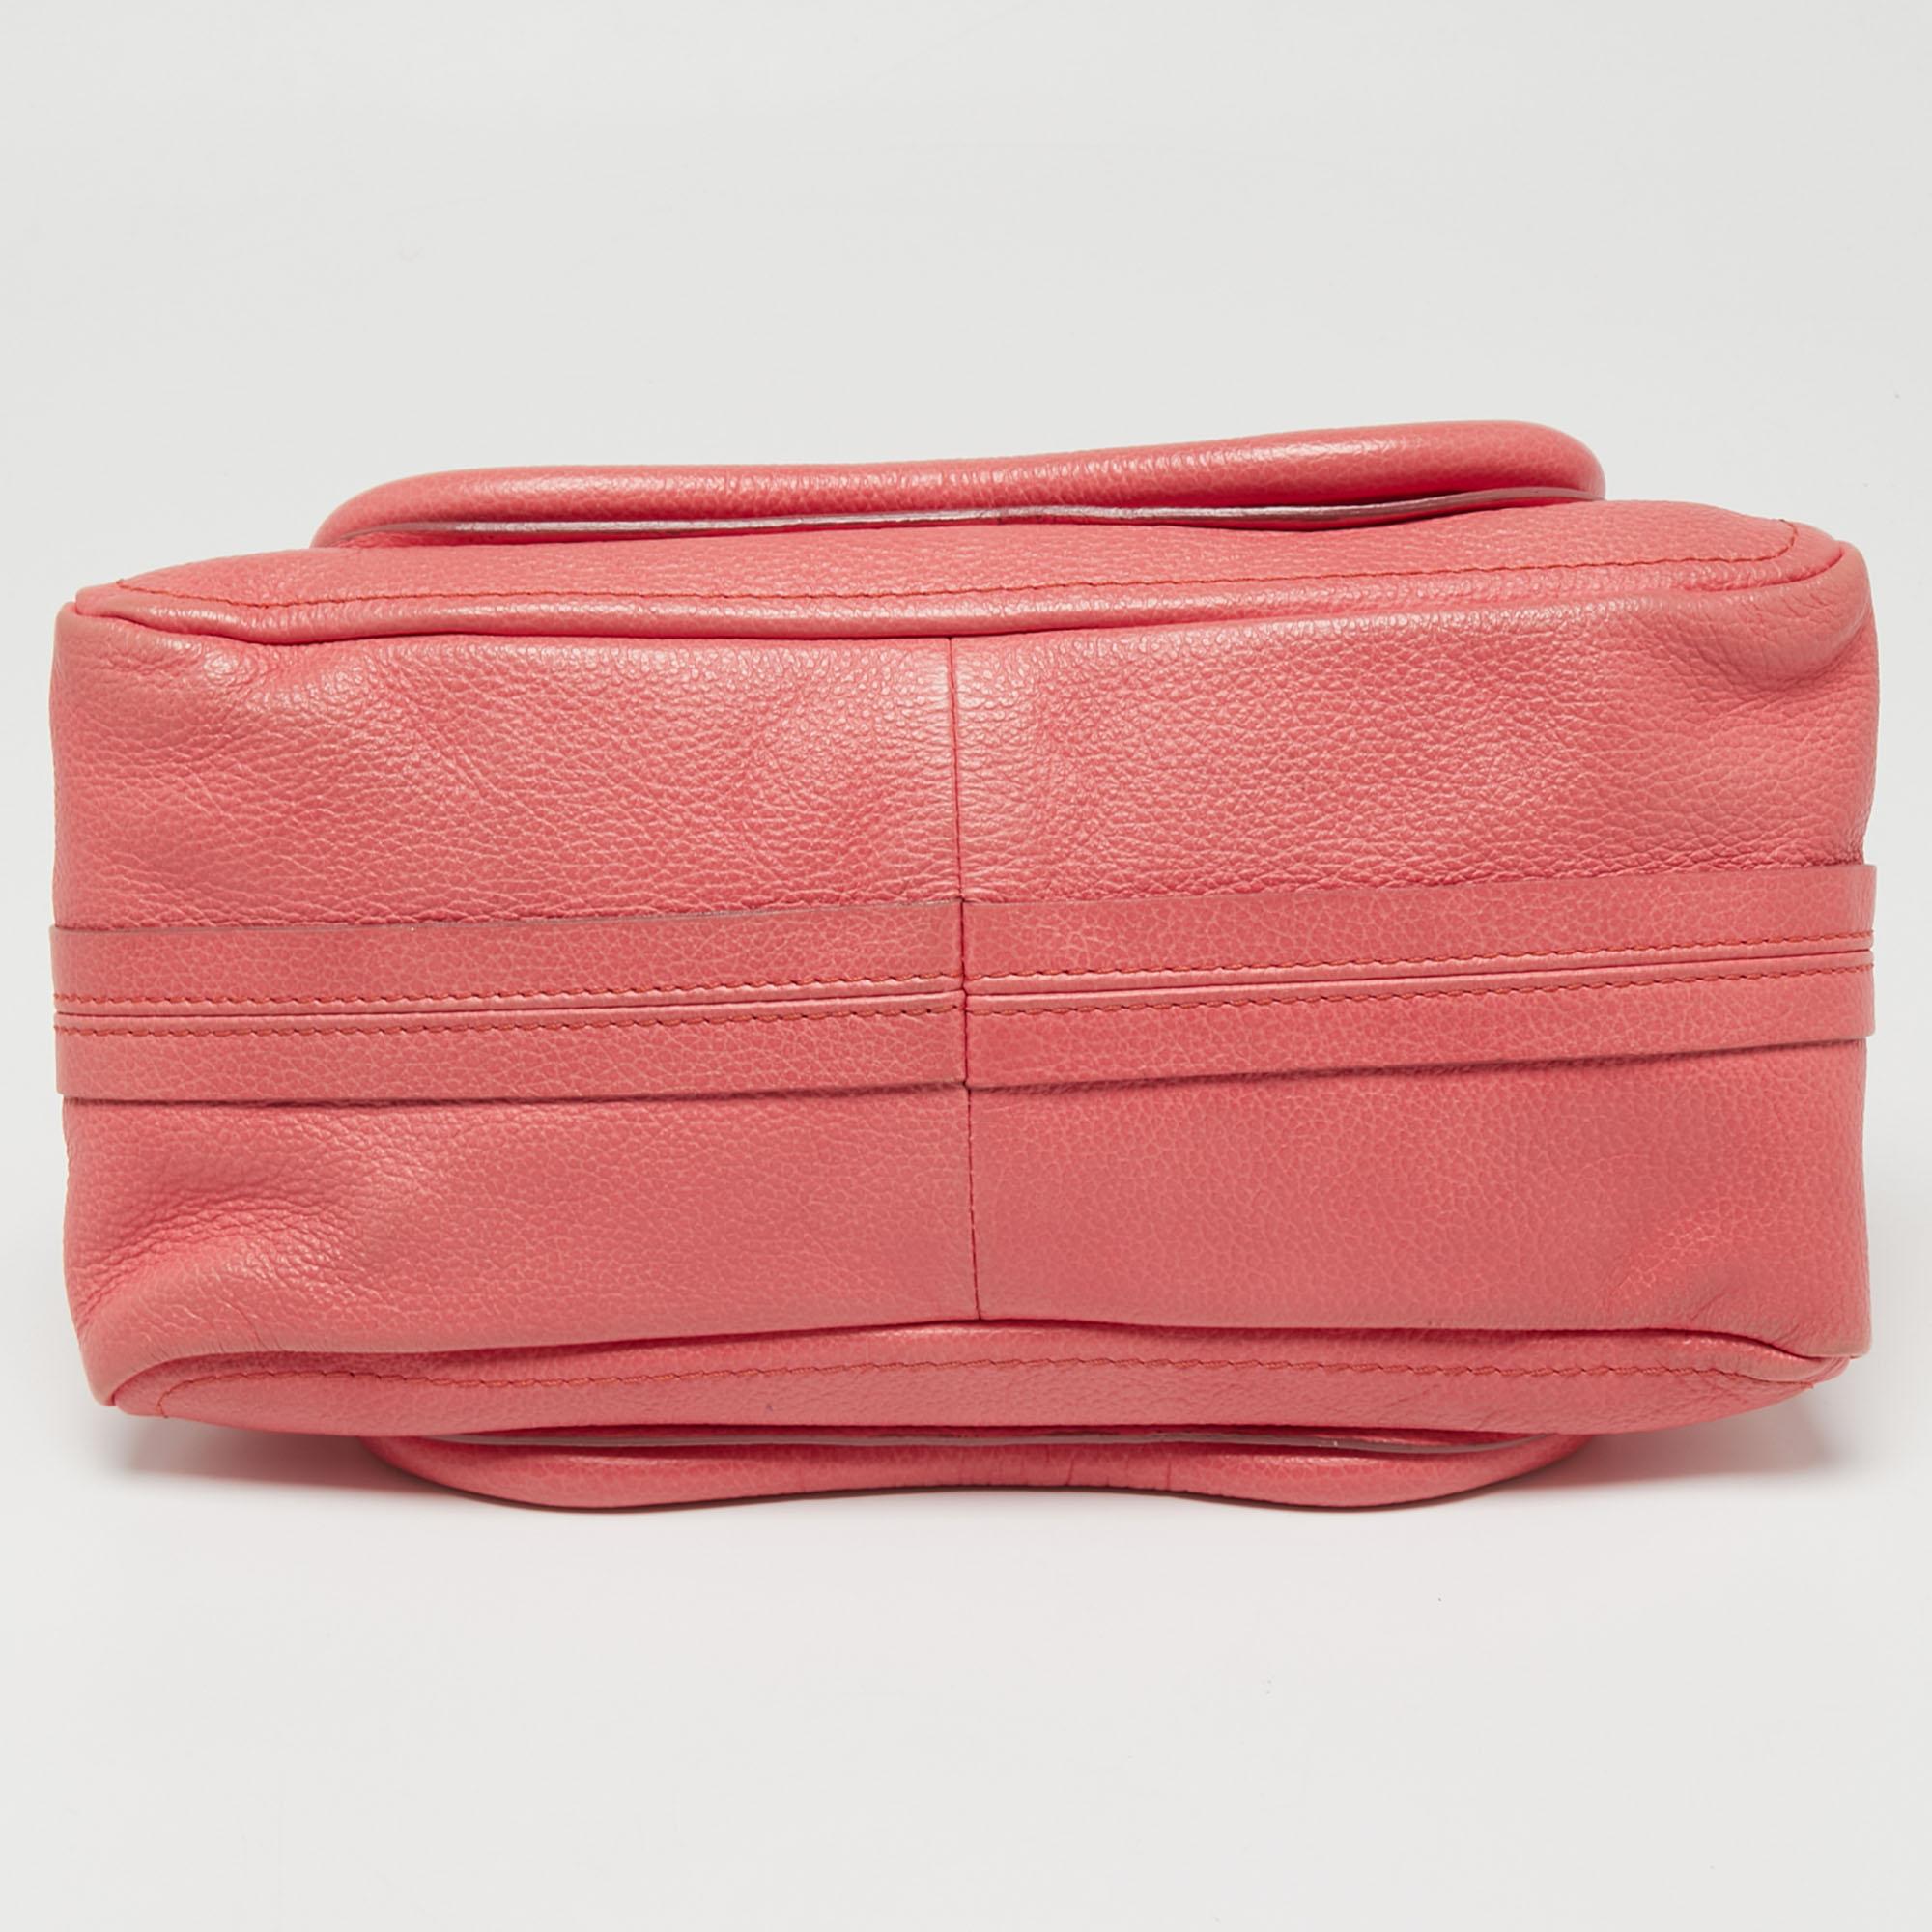 coral pink bag